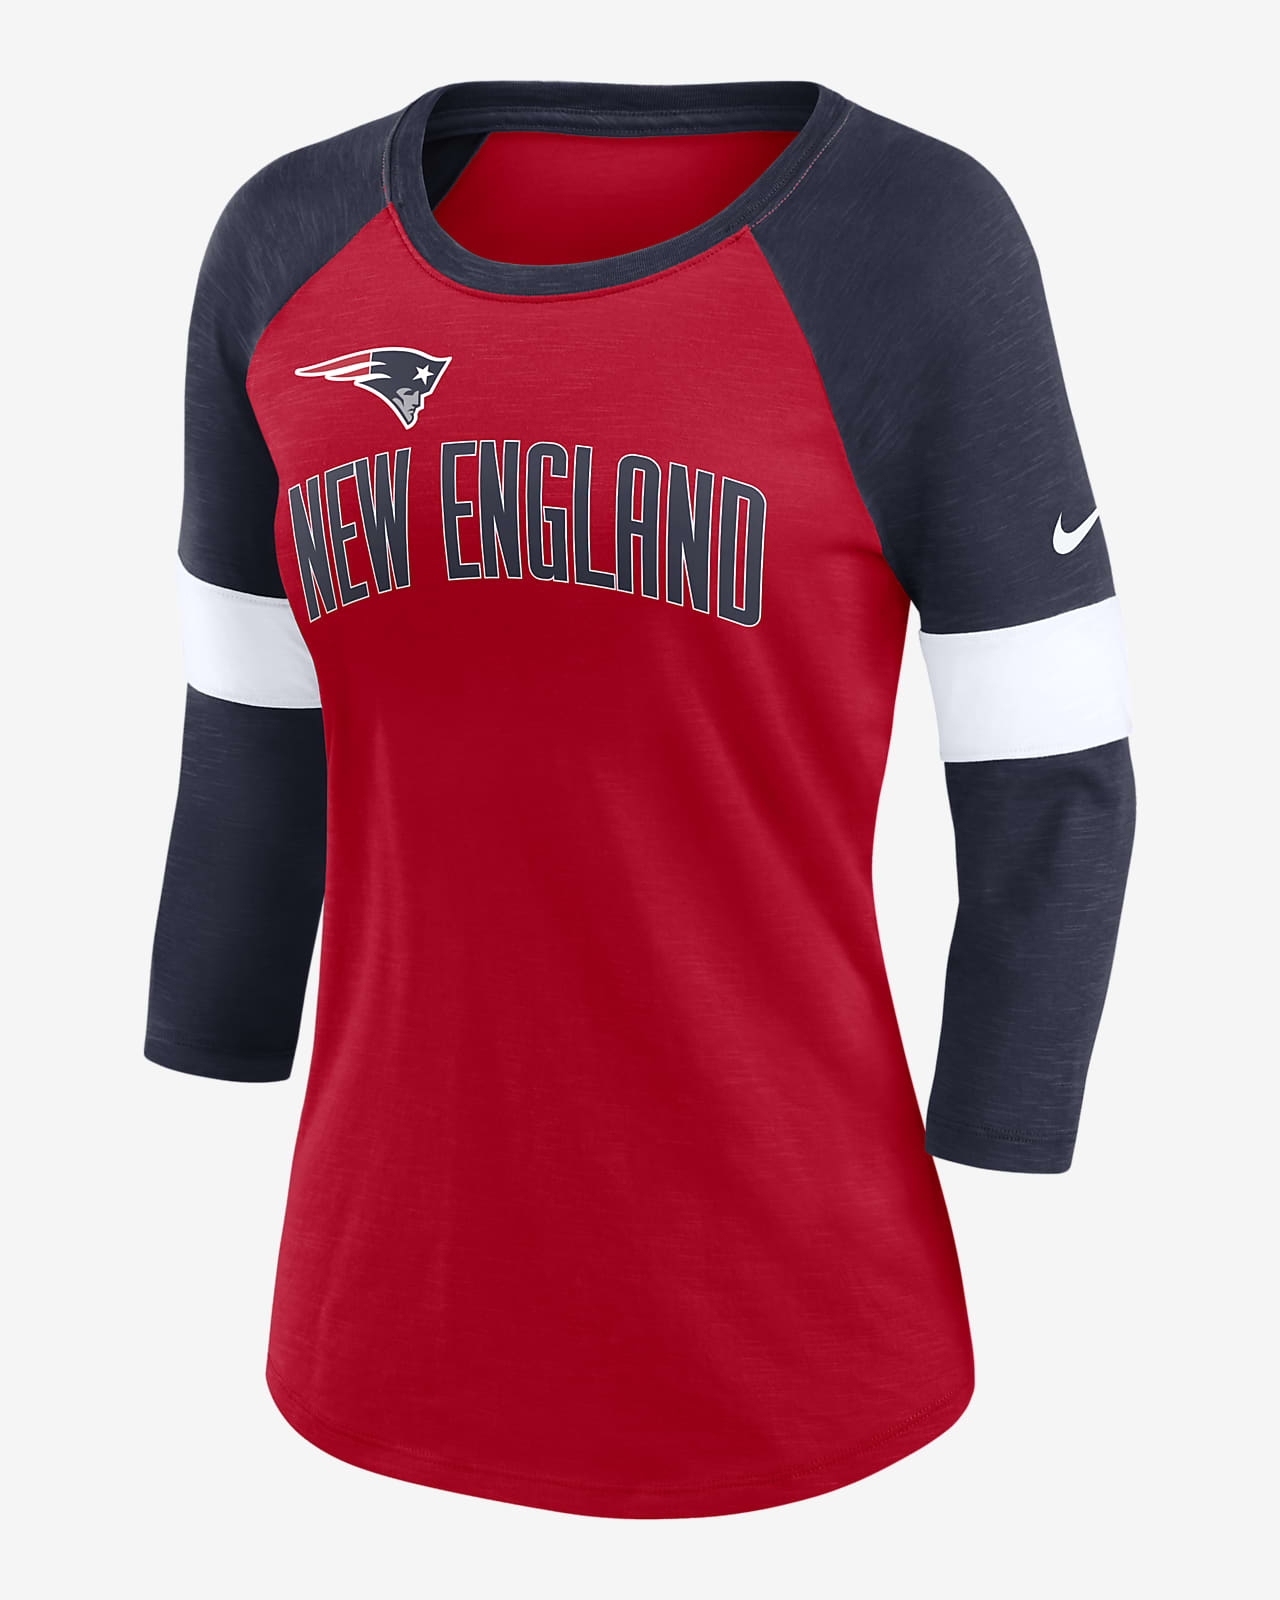 Nike Pride (NFL New England Patriots) Women's 3/4-Sleeve T-Shirt.